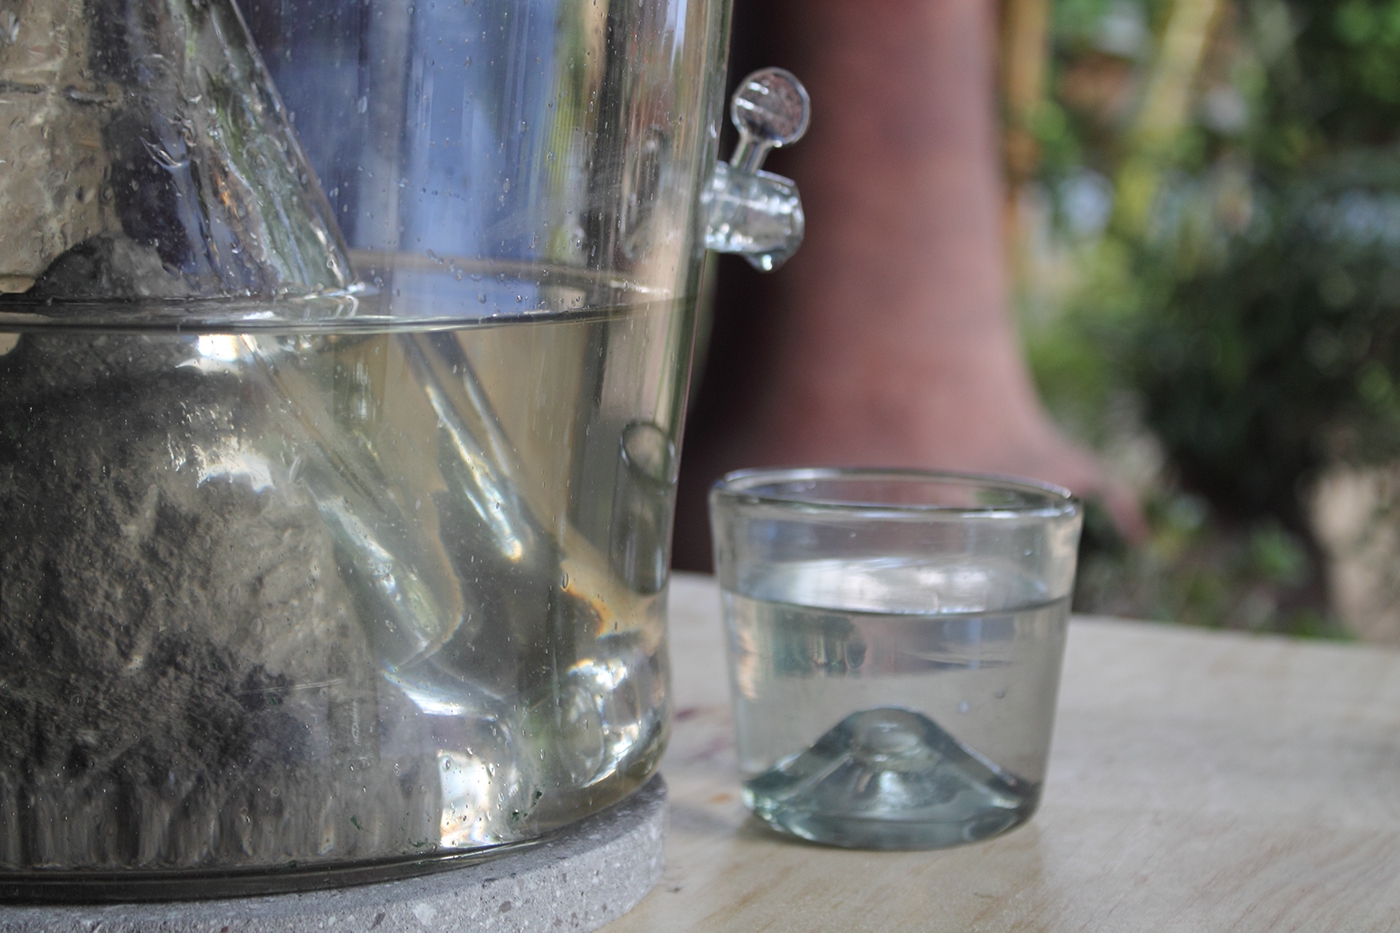 filter strain water glass cups cone time clock blown glass mexico Guadalajara stone rock